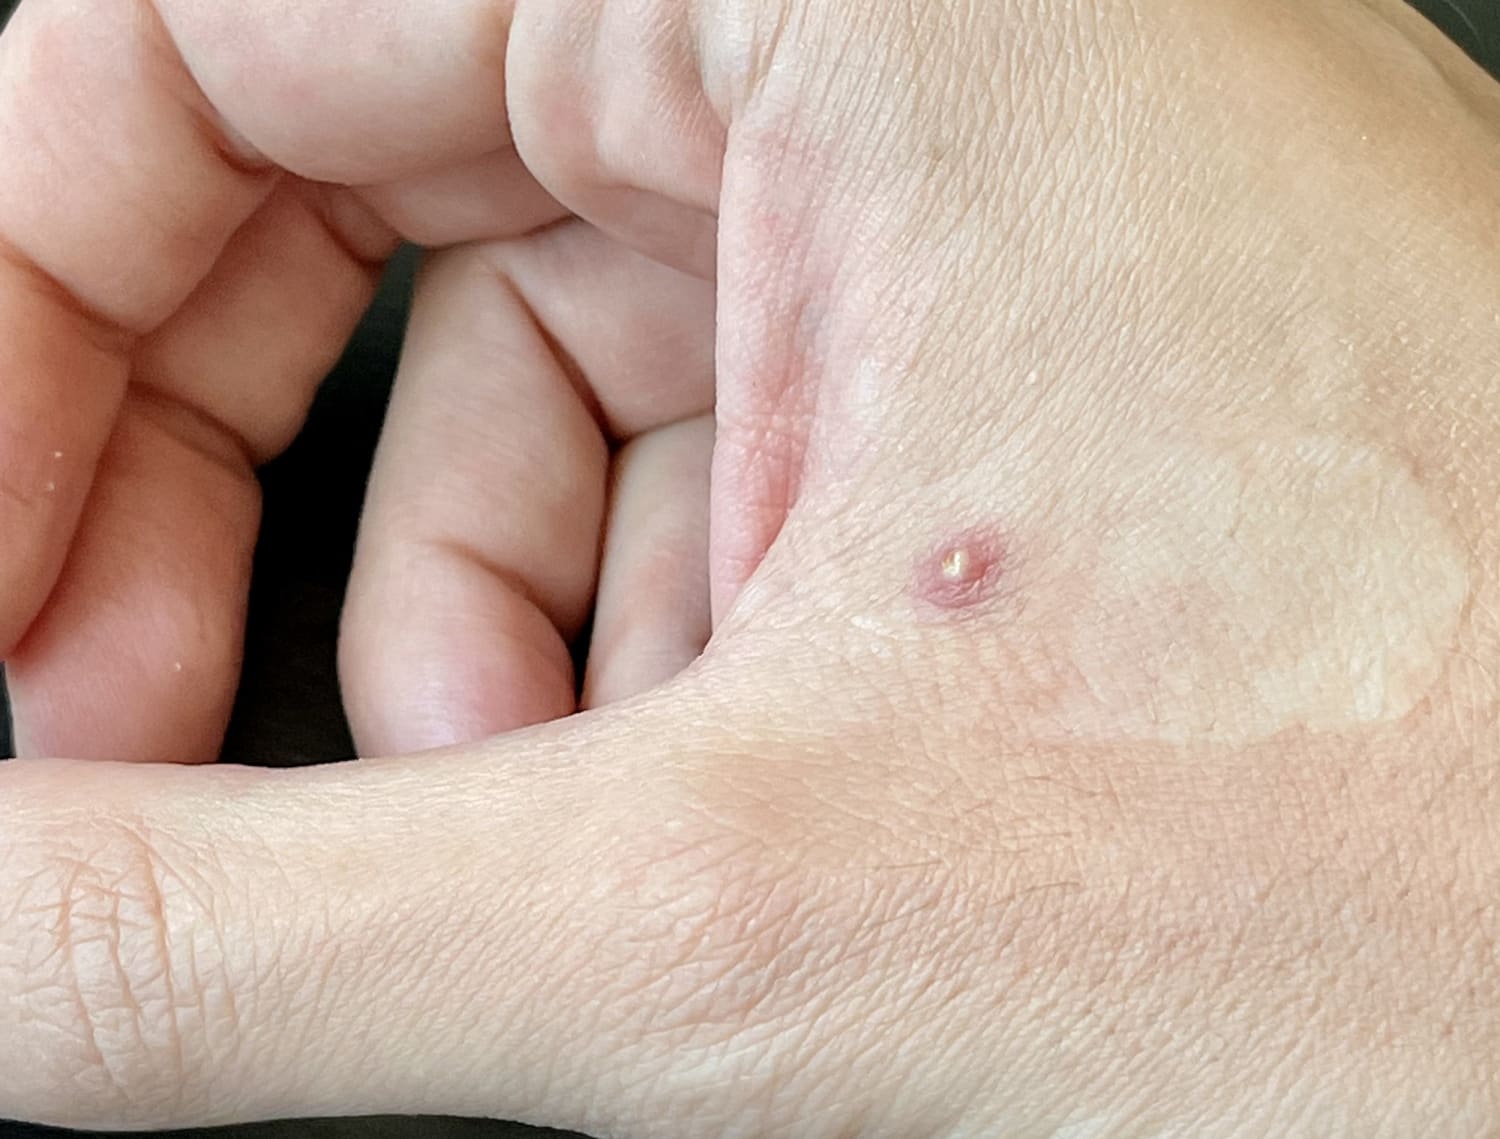 Monkeypox patient details symptoms: 'Worst pain I've ever experienced